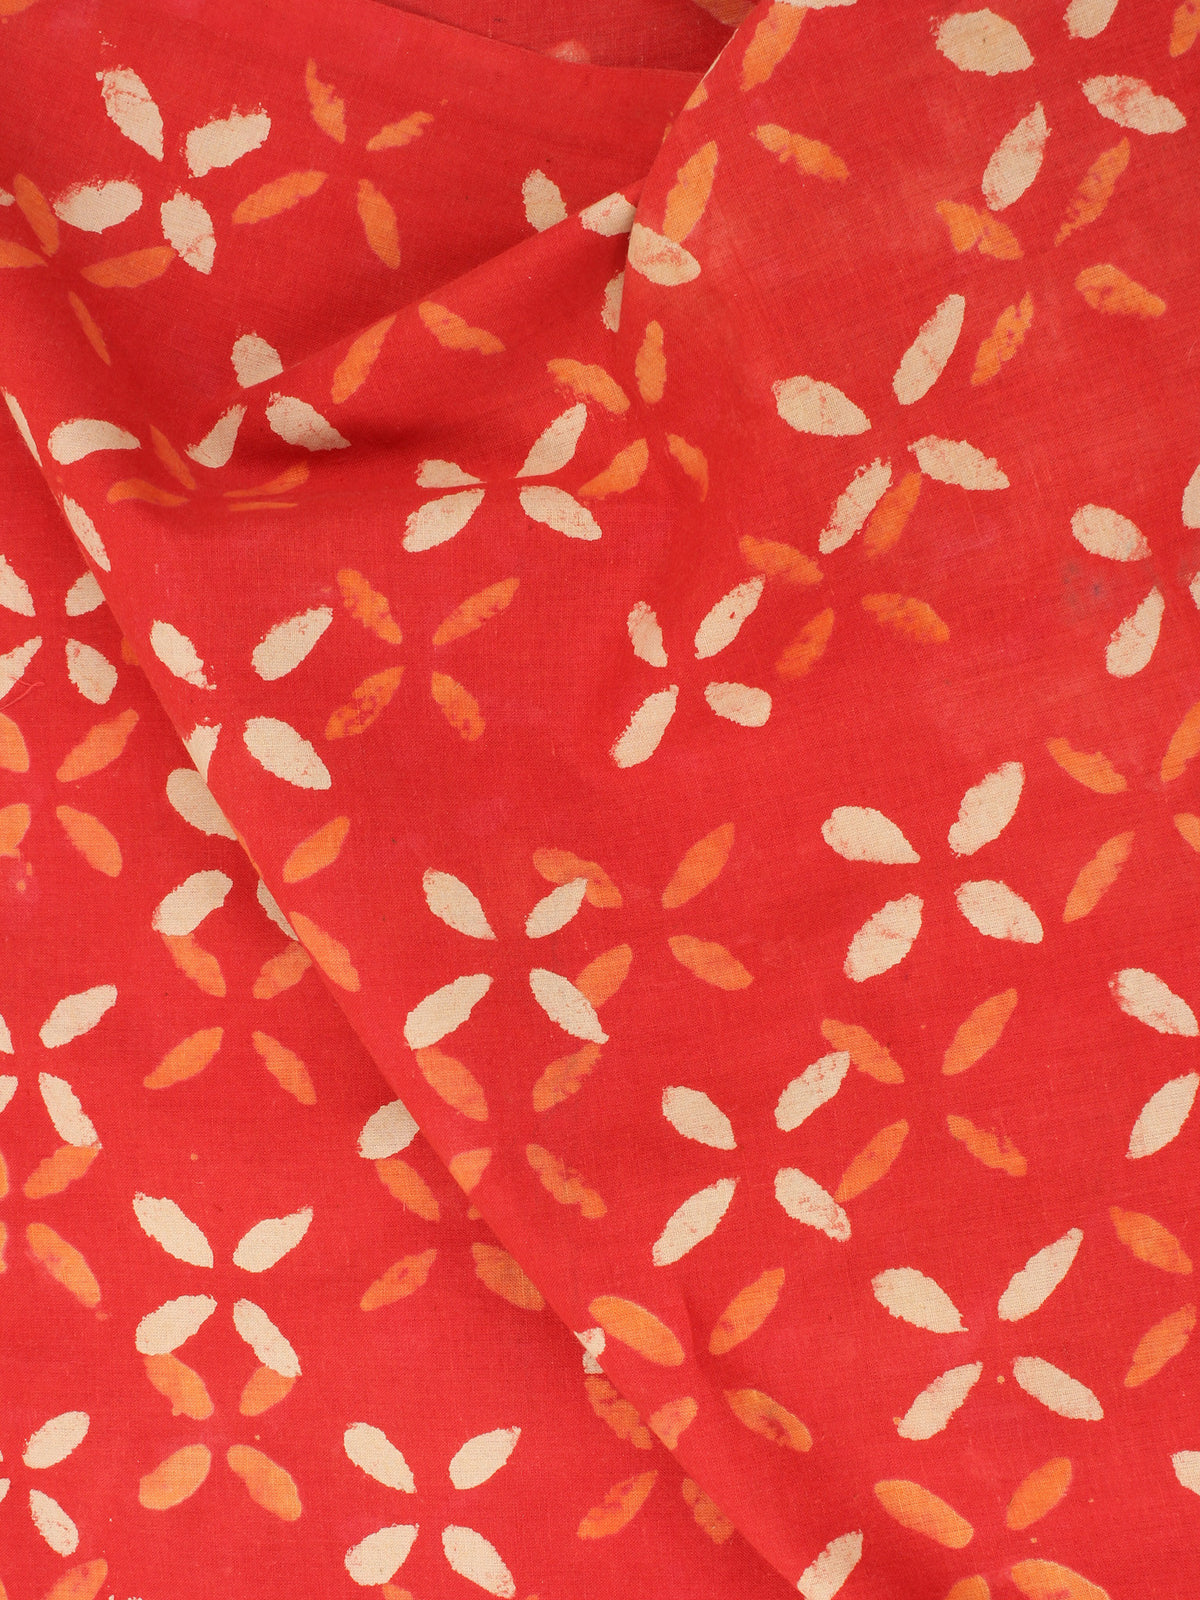 Orange Beige Natural Dyed Hand Block Printed Cotton Fabric Per Meter - F0916234